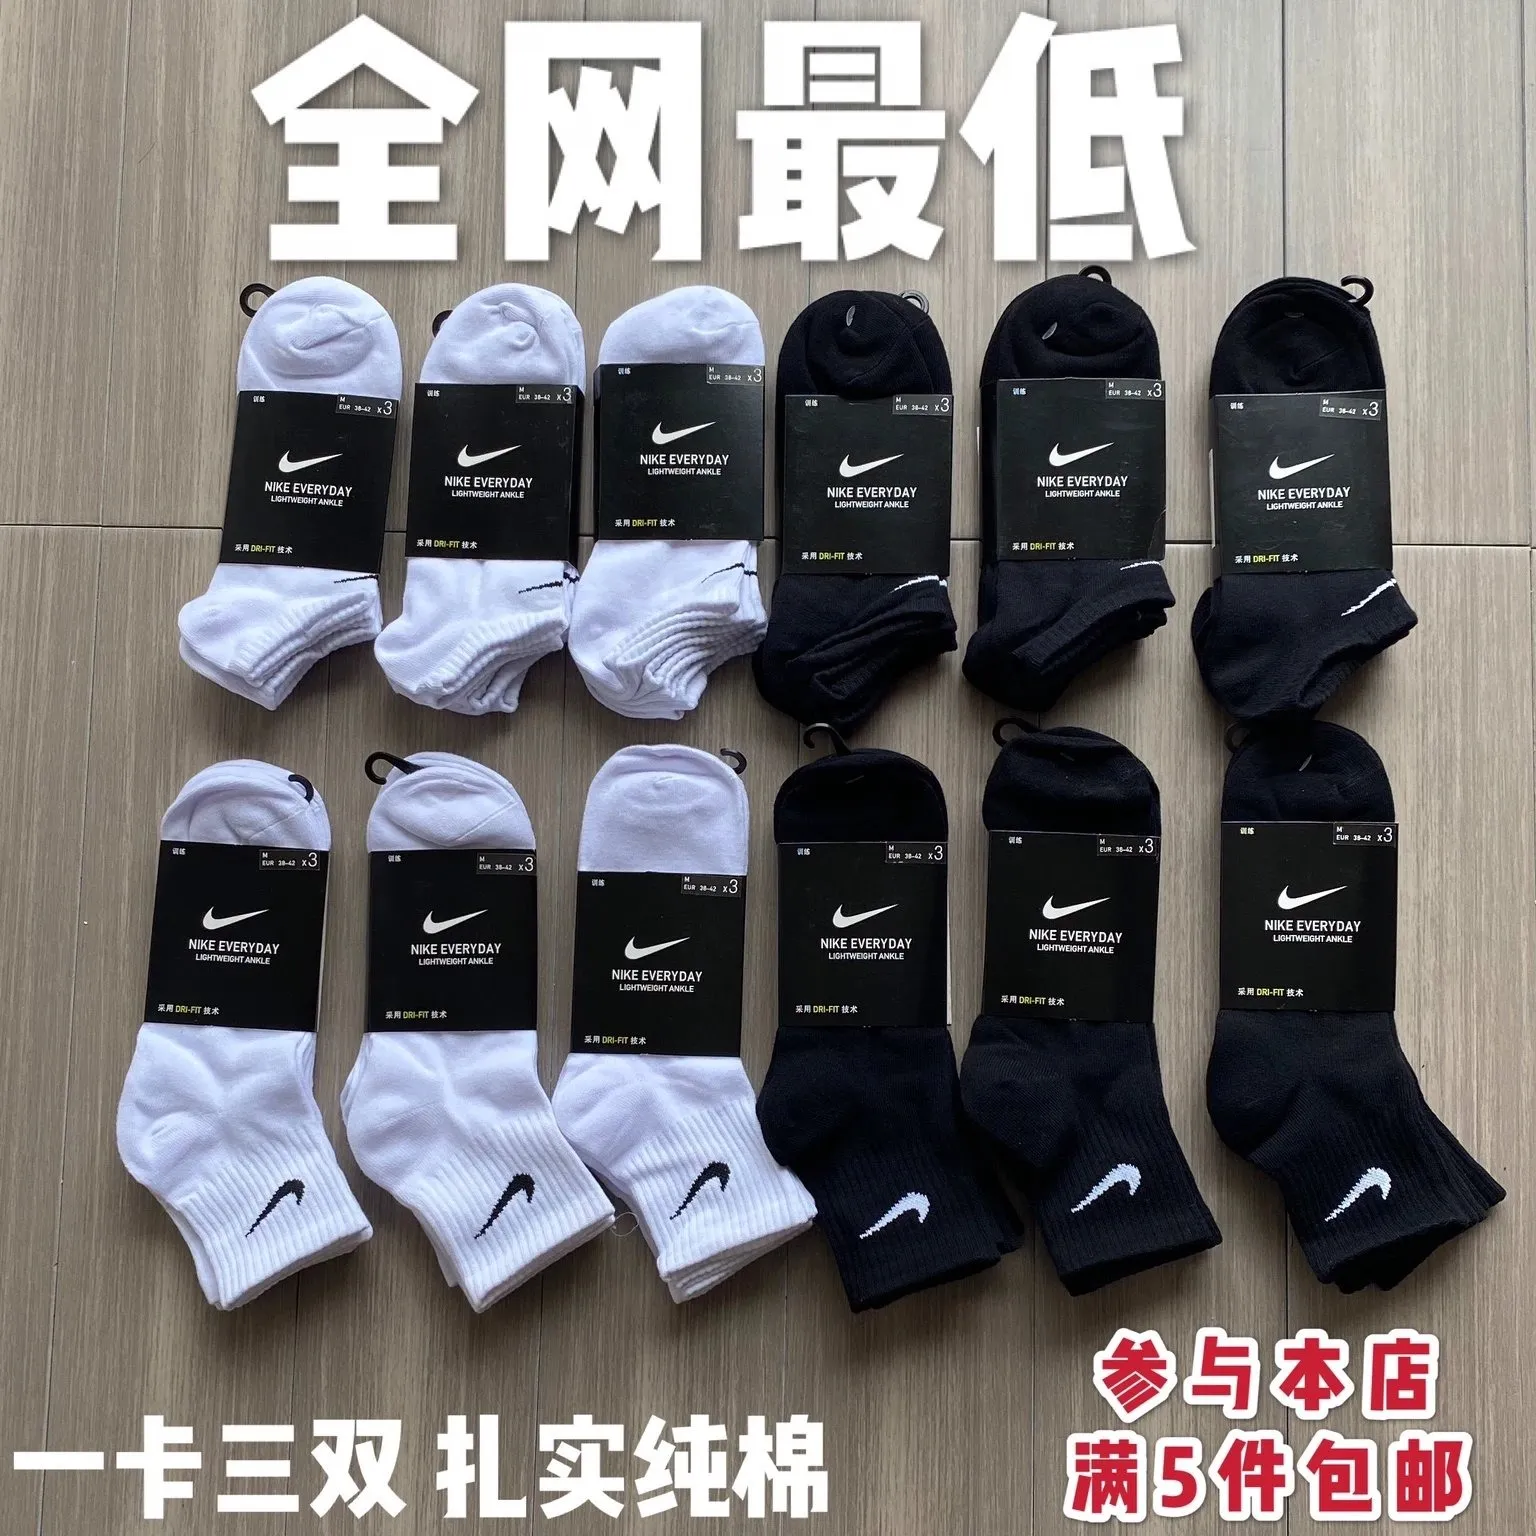 5 pairs of nike socks